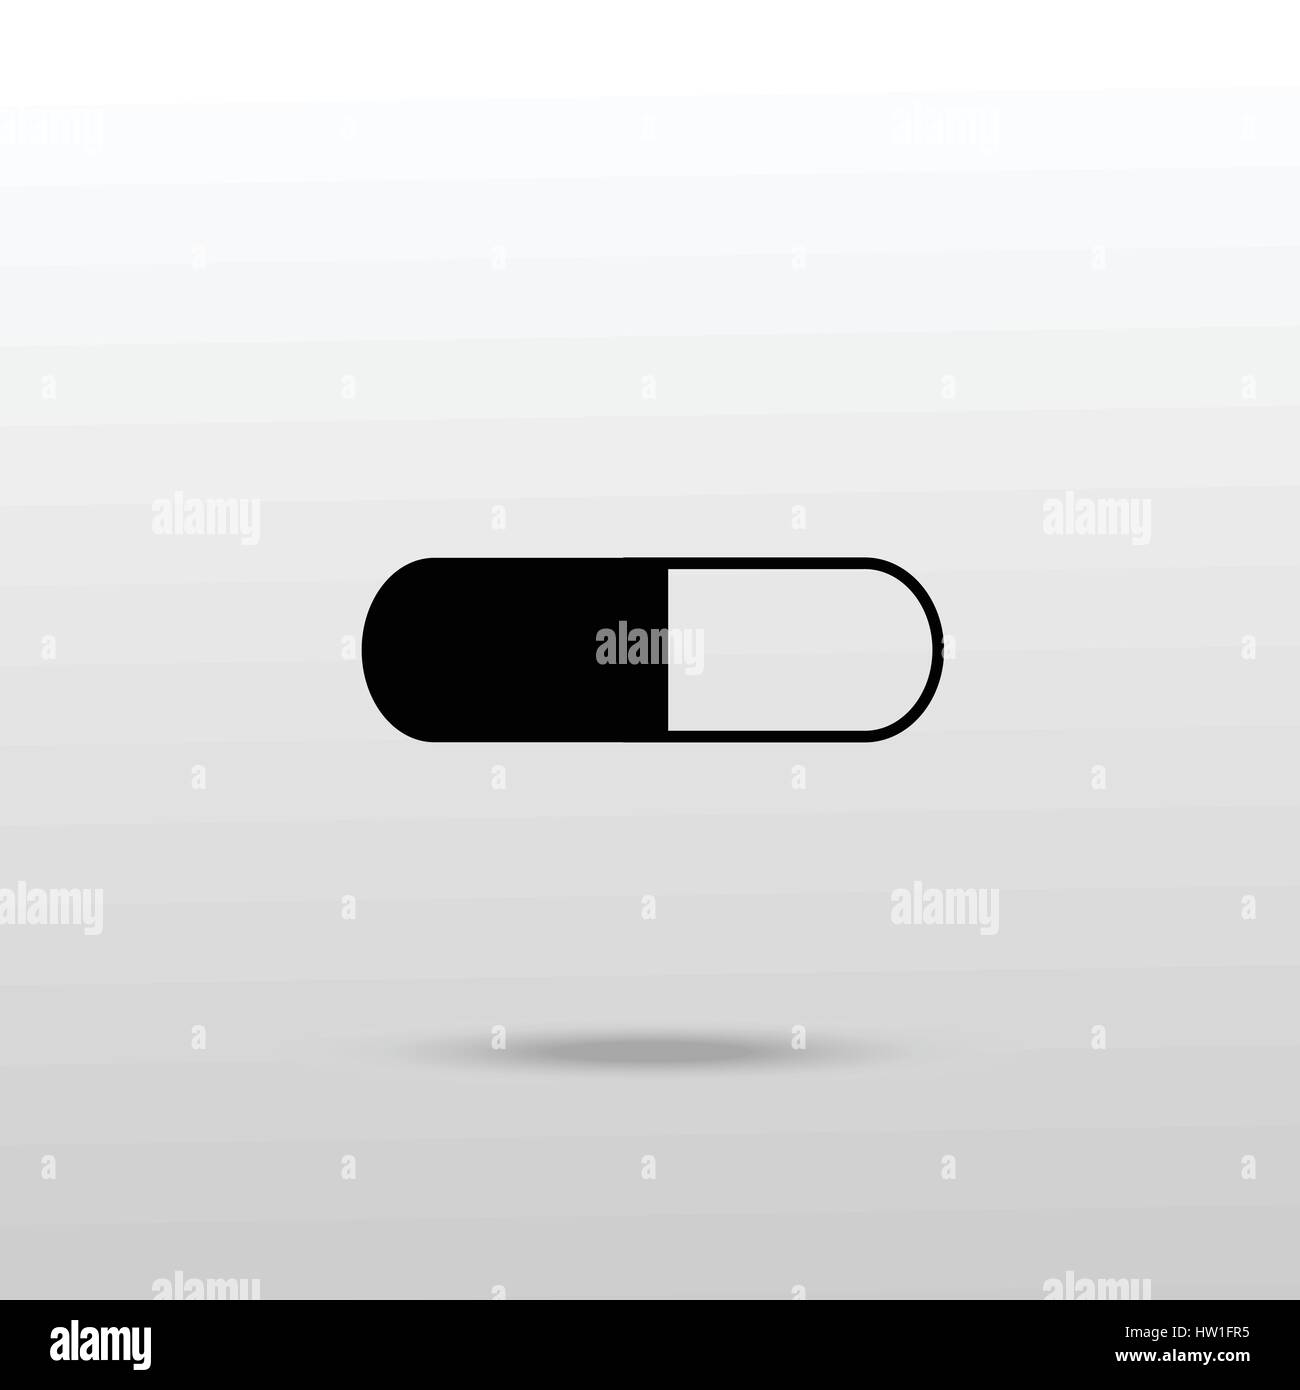 Tabletten Vitamin Ikone der Medikamente Pillen und Medikamente flache Vektor-illustration Stock Vektor